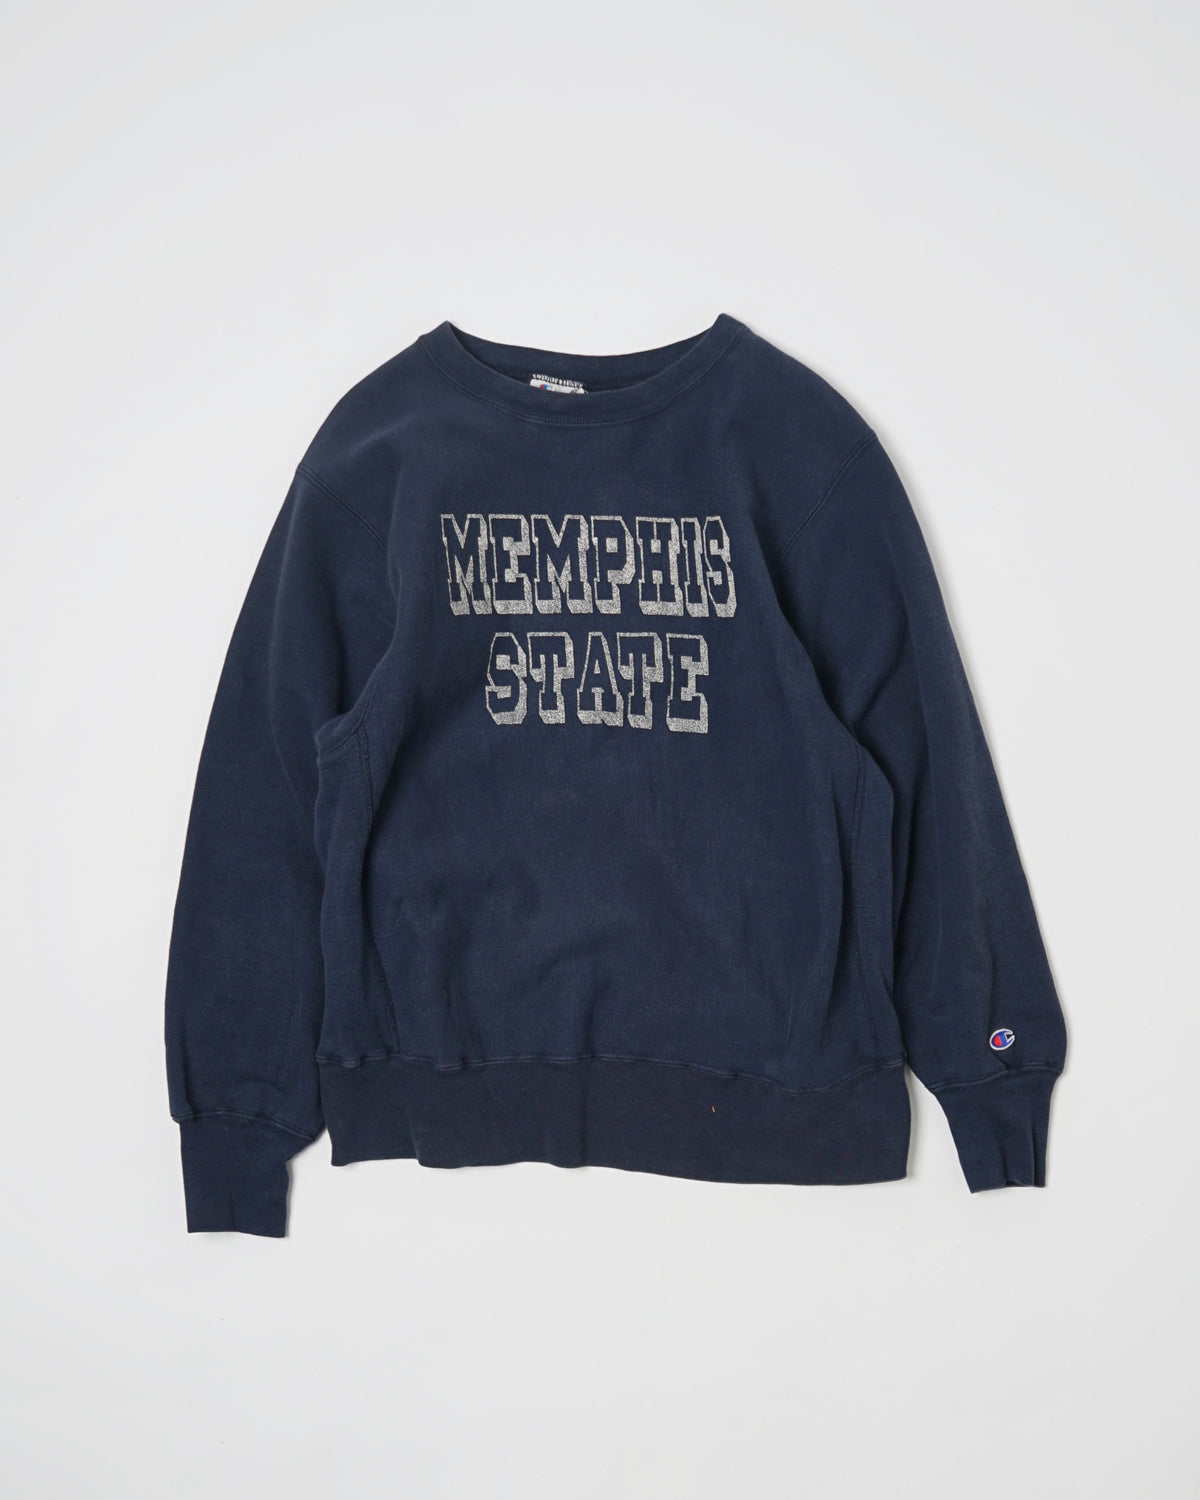 Champions Printed Sweatshirts Menphis State